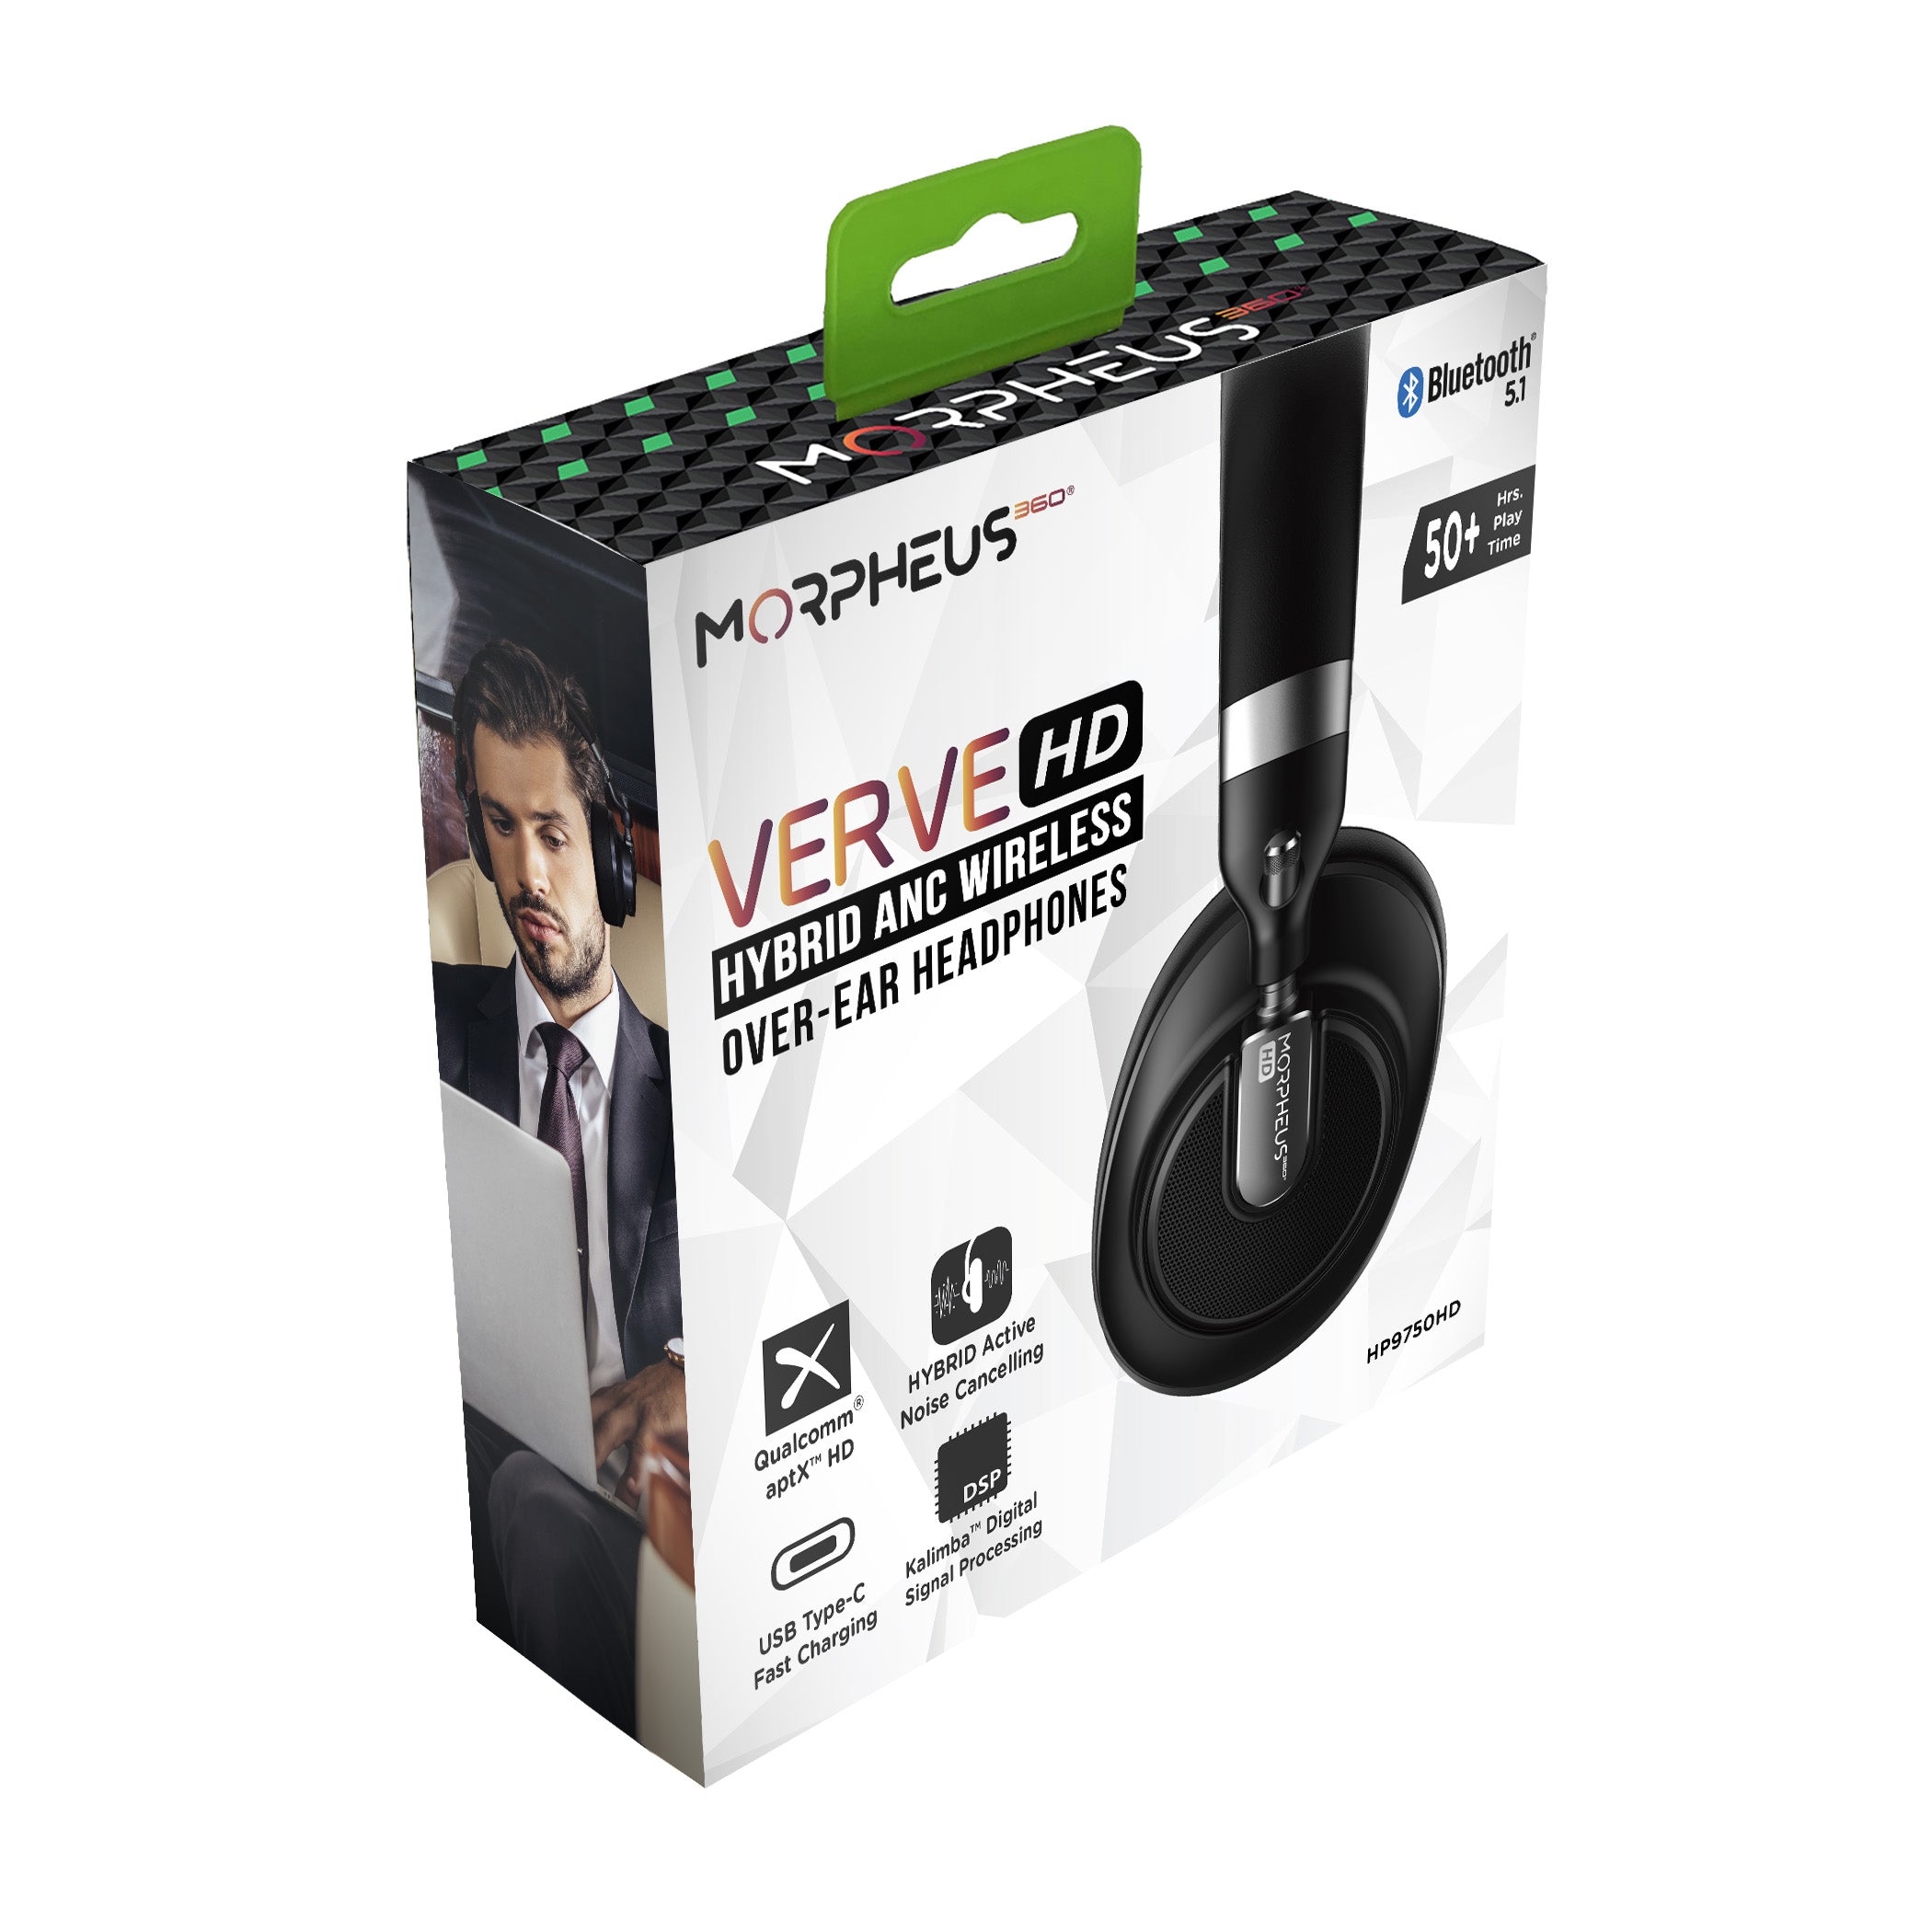 Morpheus 360 Verve HD Hybrid Wireless Noise Cancelling Headphones